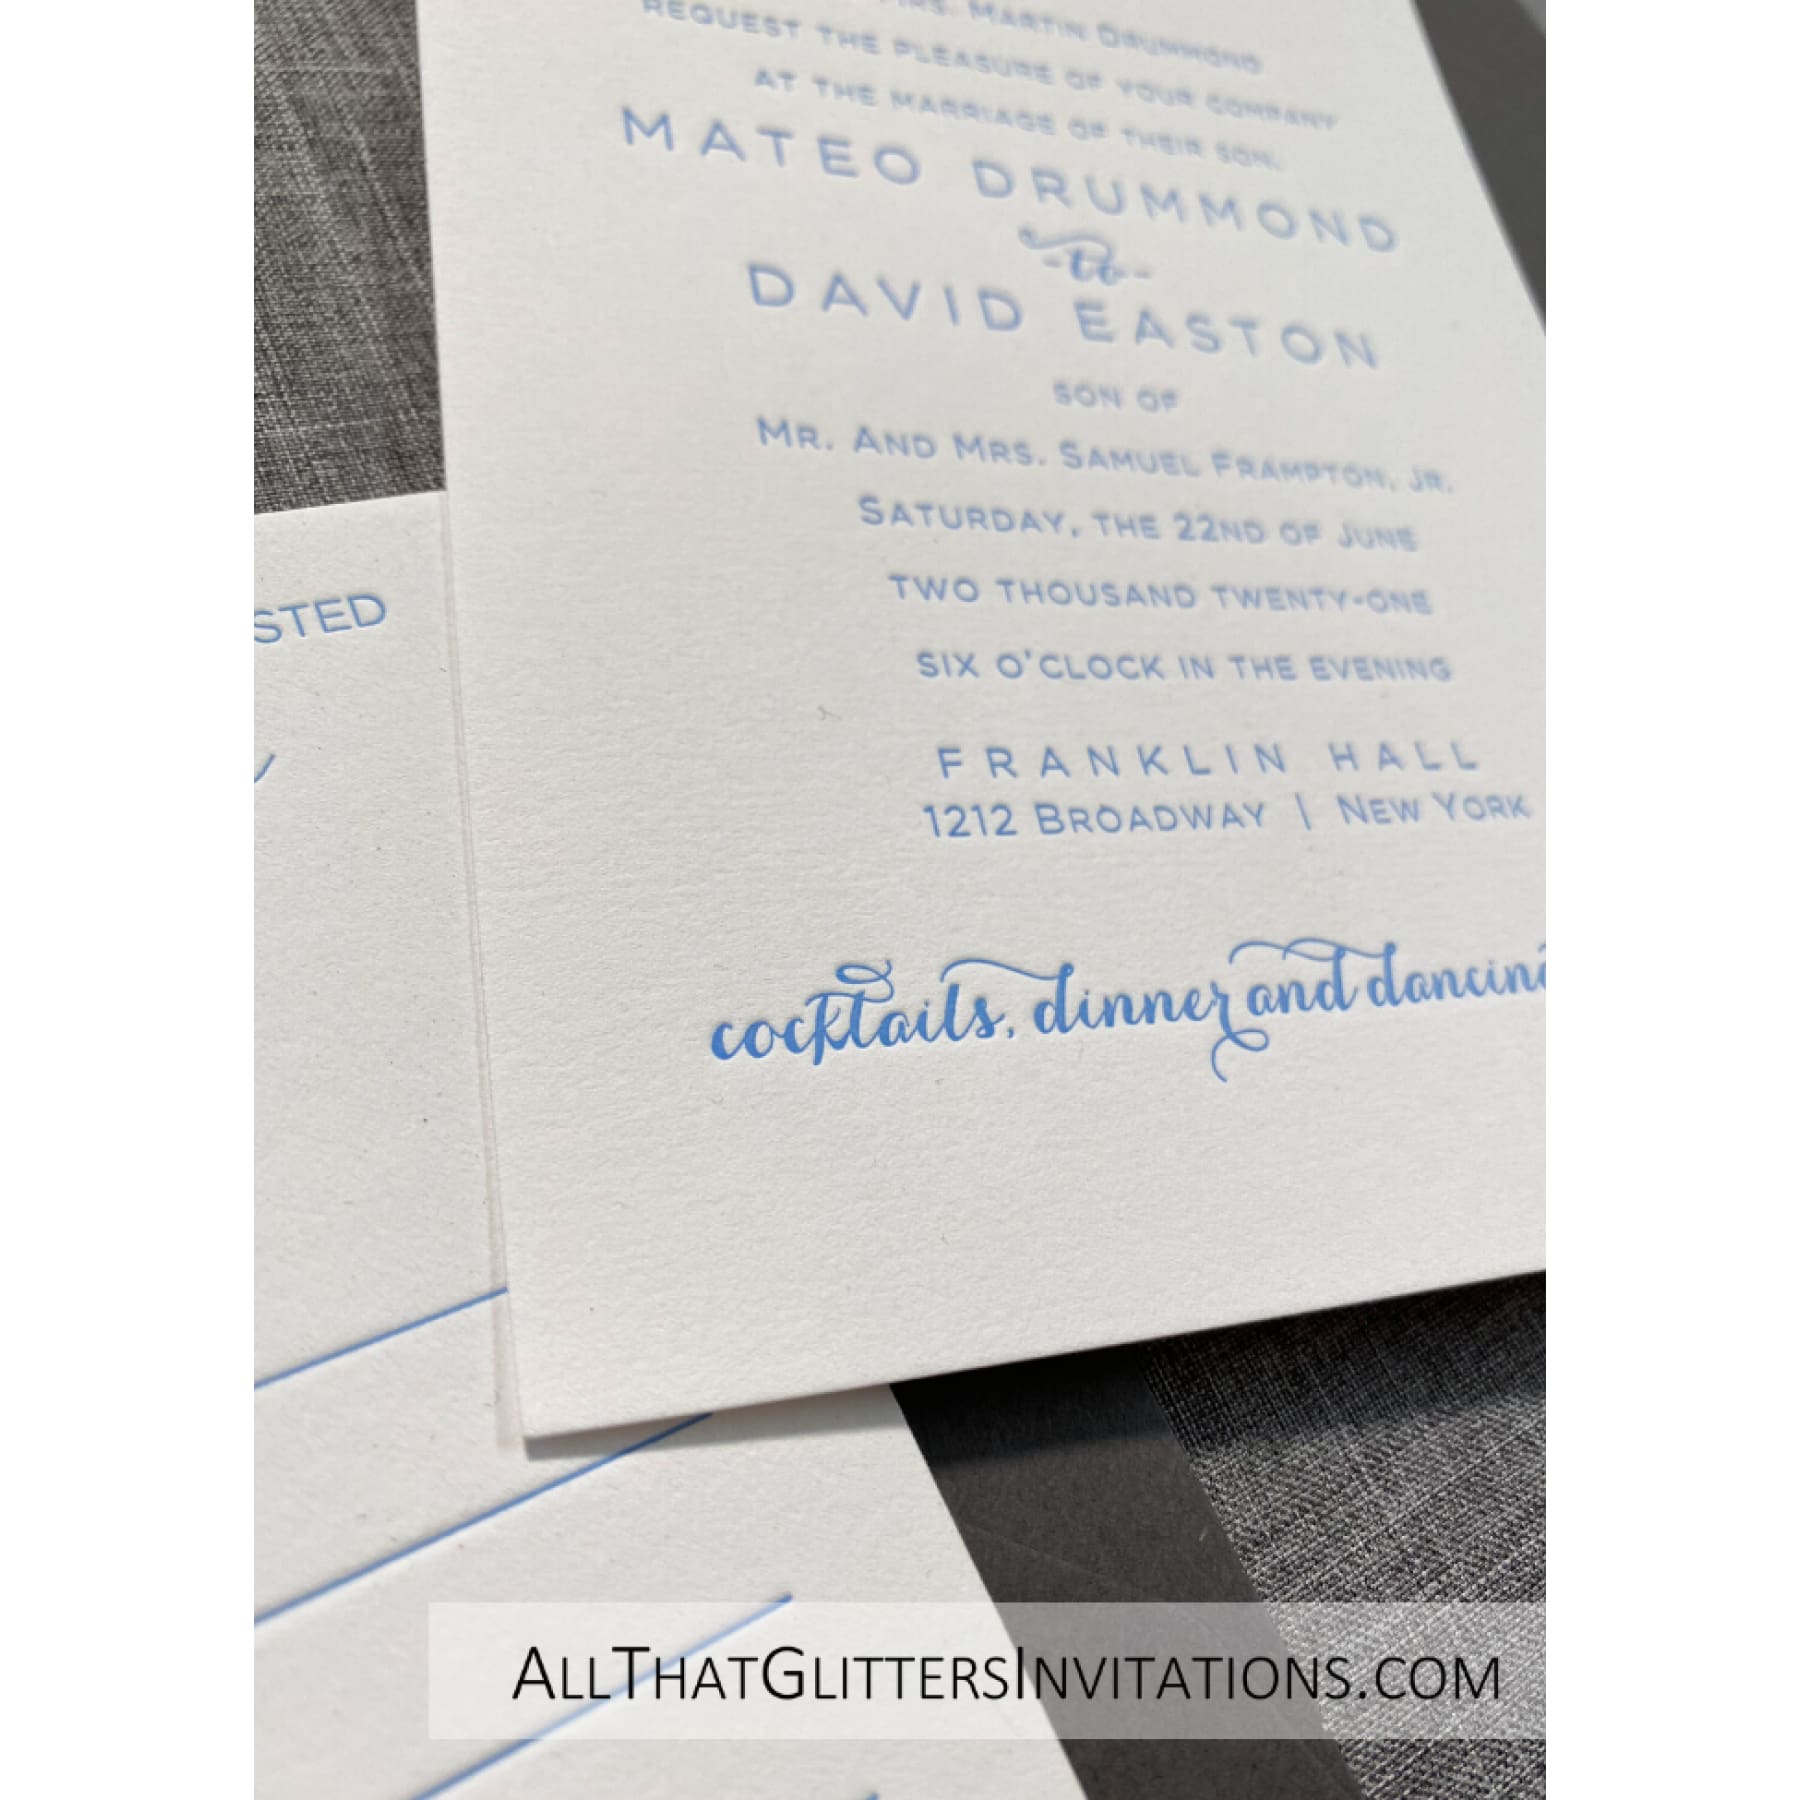 Letterpress Wedding Invitation, Marco - All That Glitters Invitations